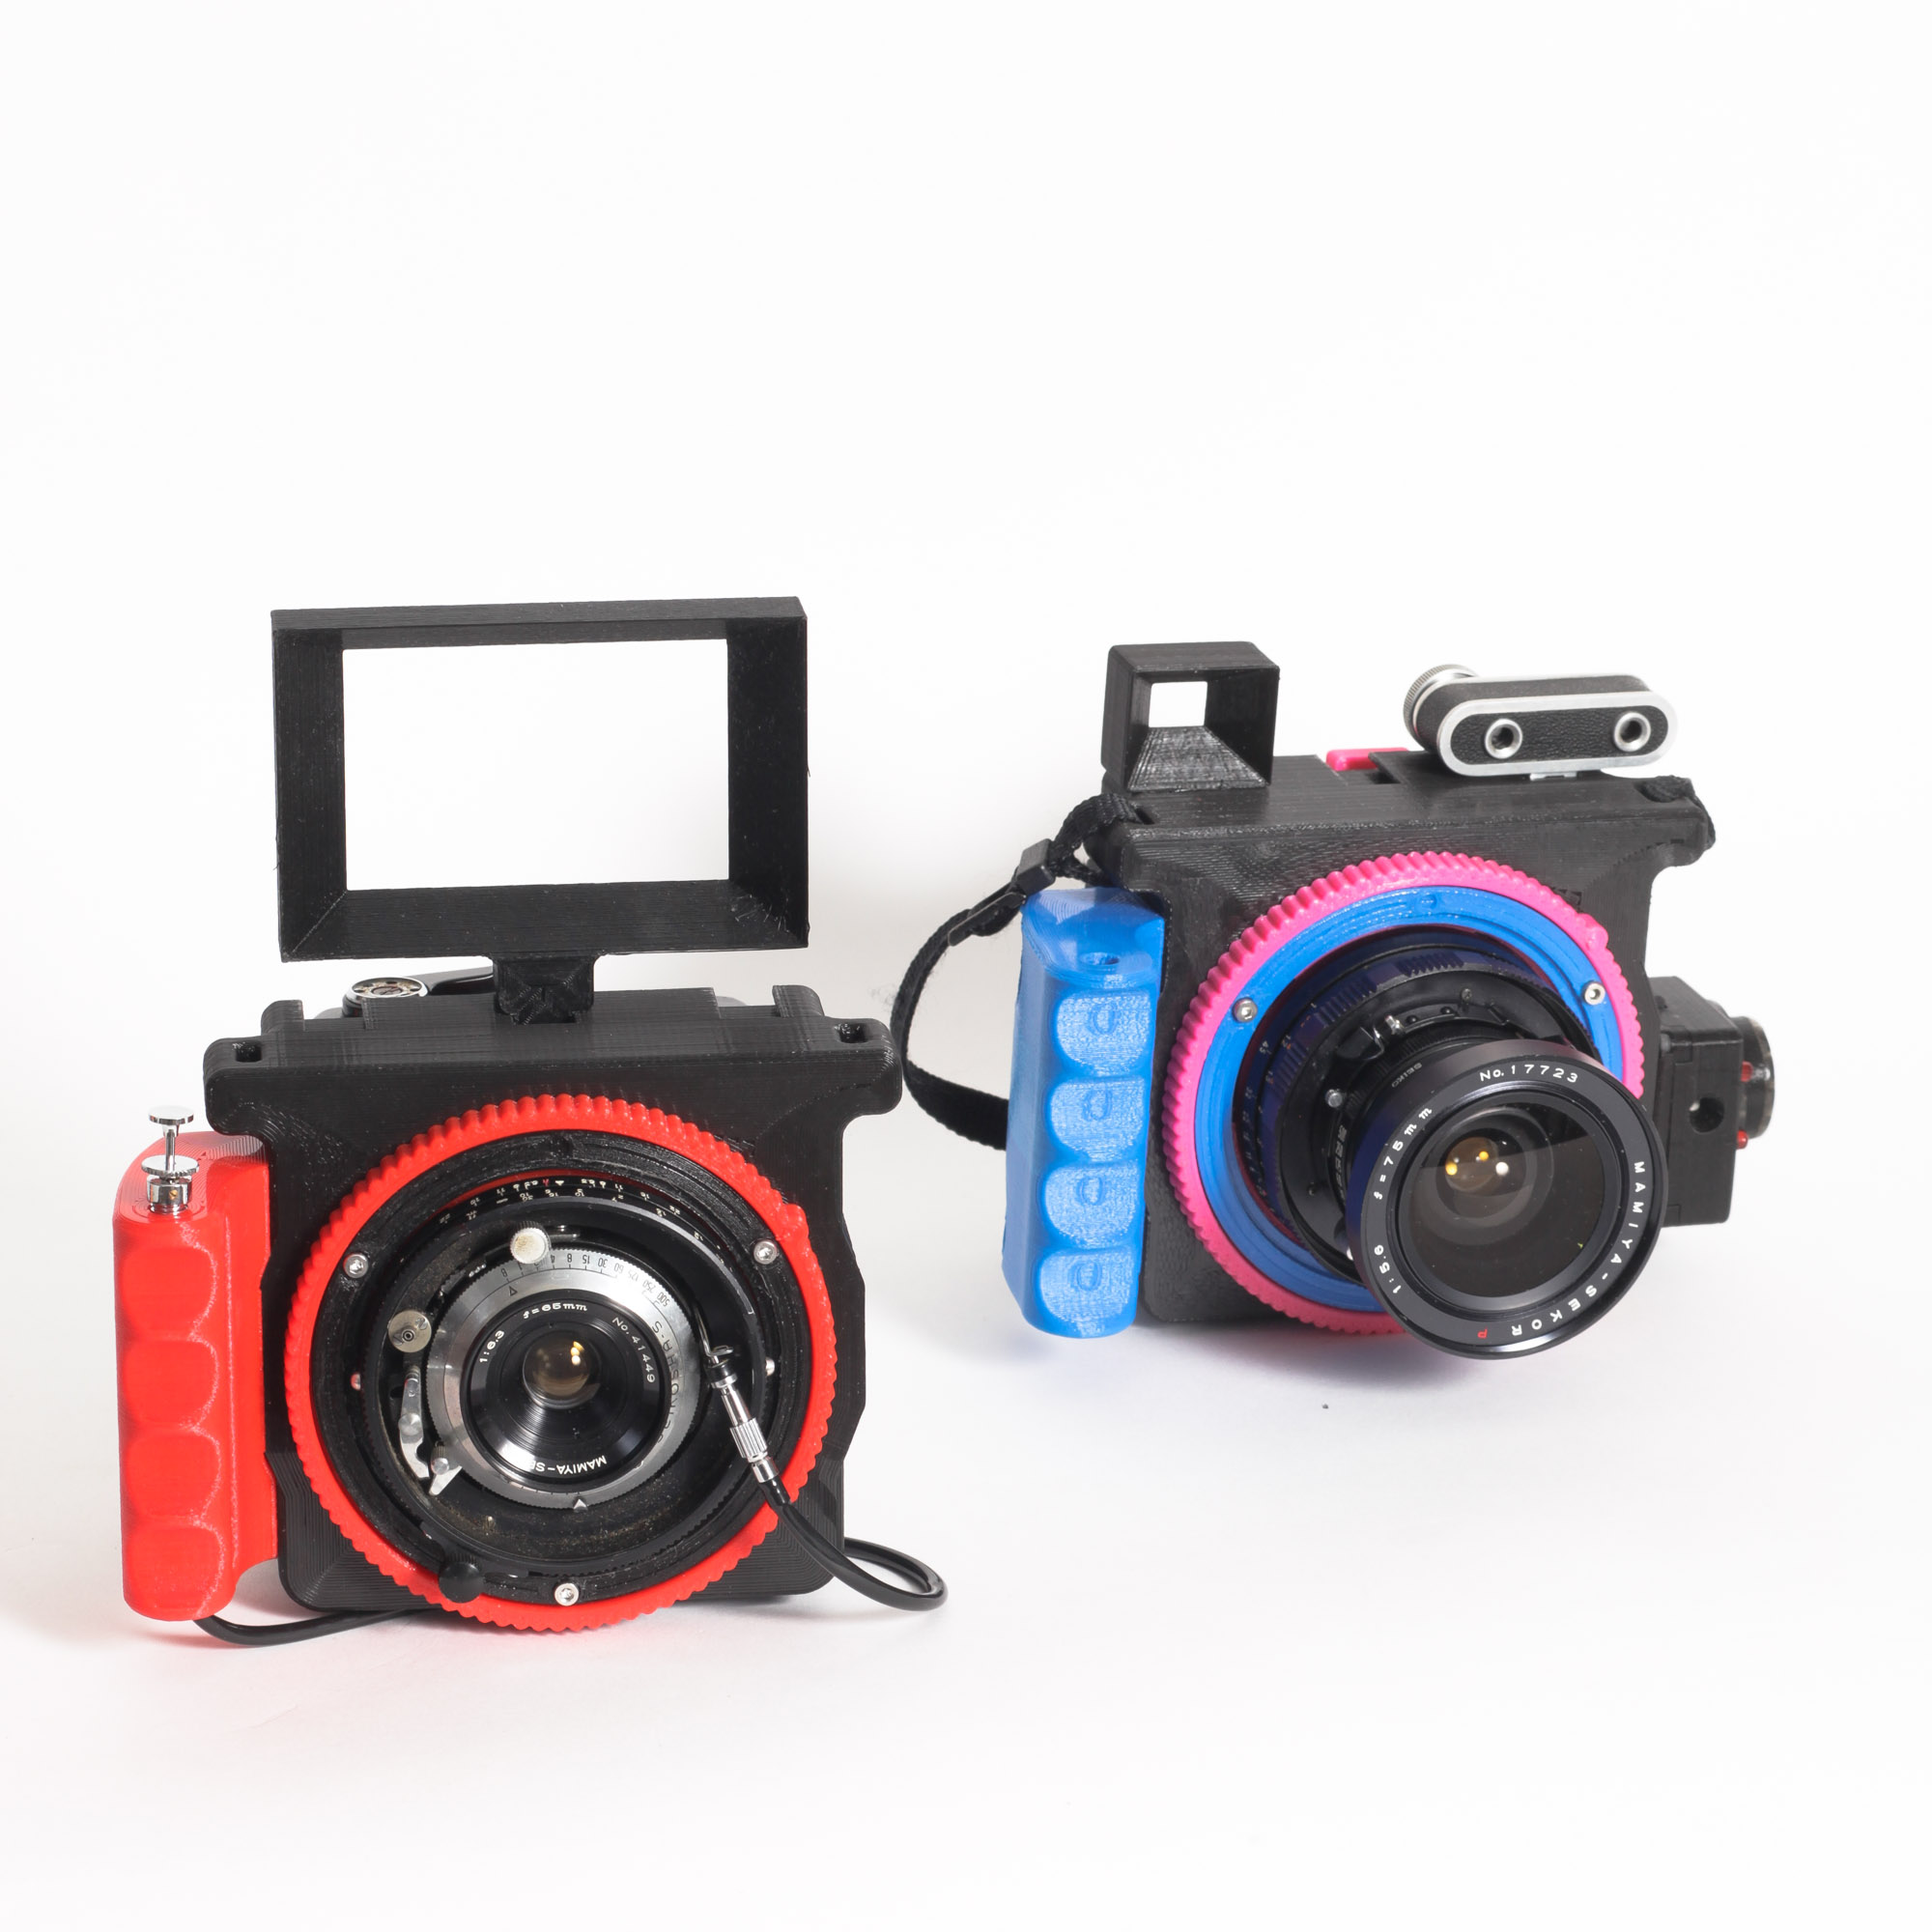 camera inventor ethan moses - 6x9 camera